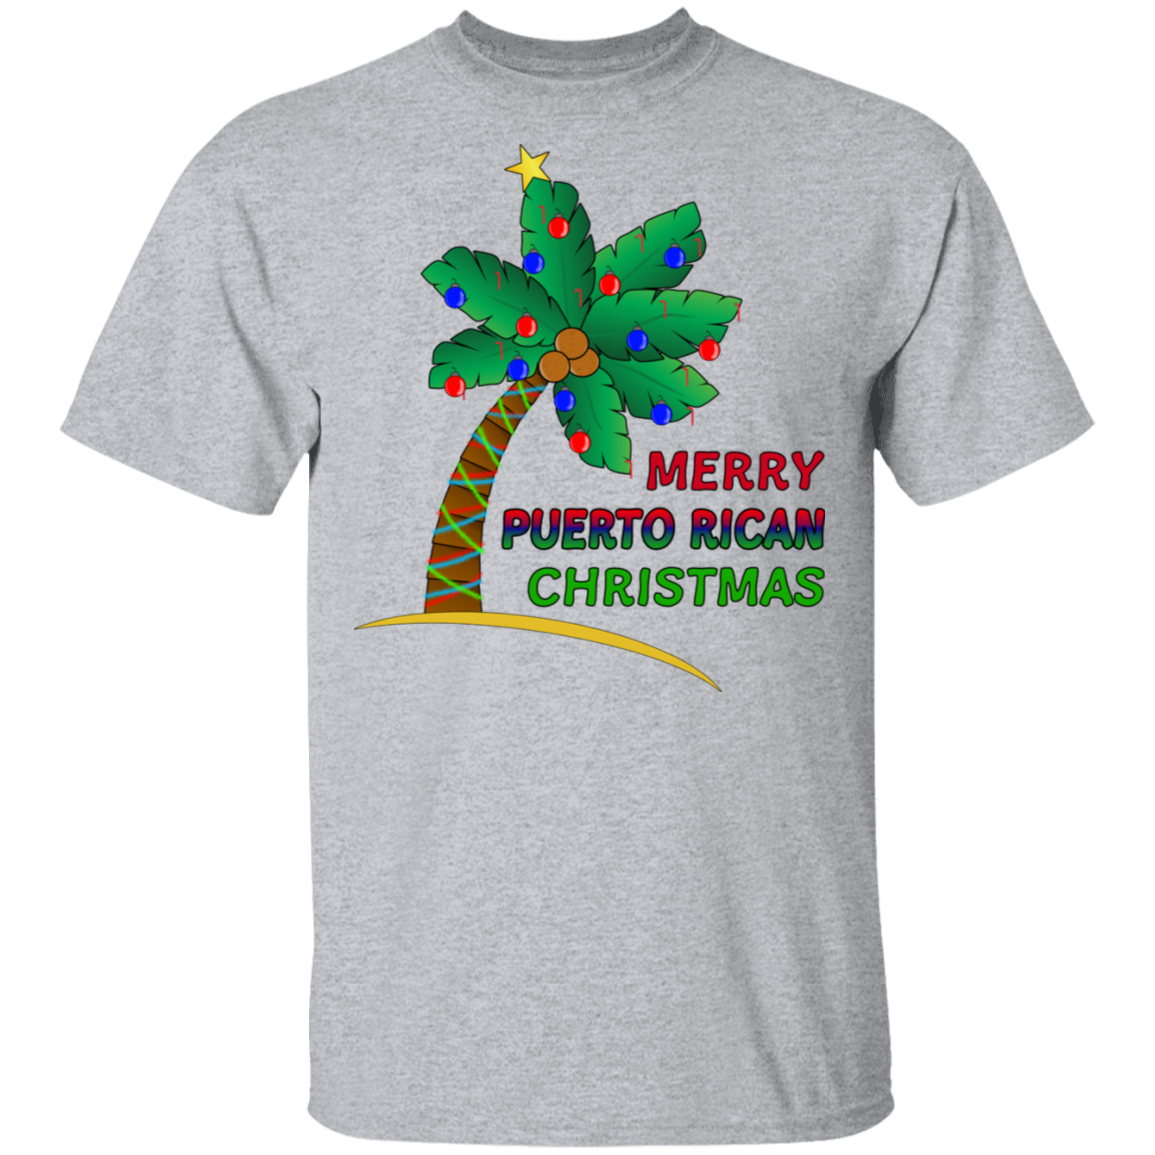 Merry PR Christmas 5.3 oz. T-Shirt - Puerto Rican Pride